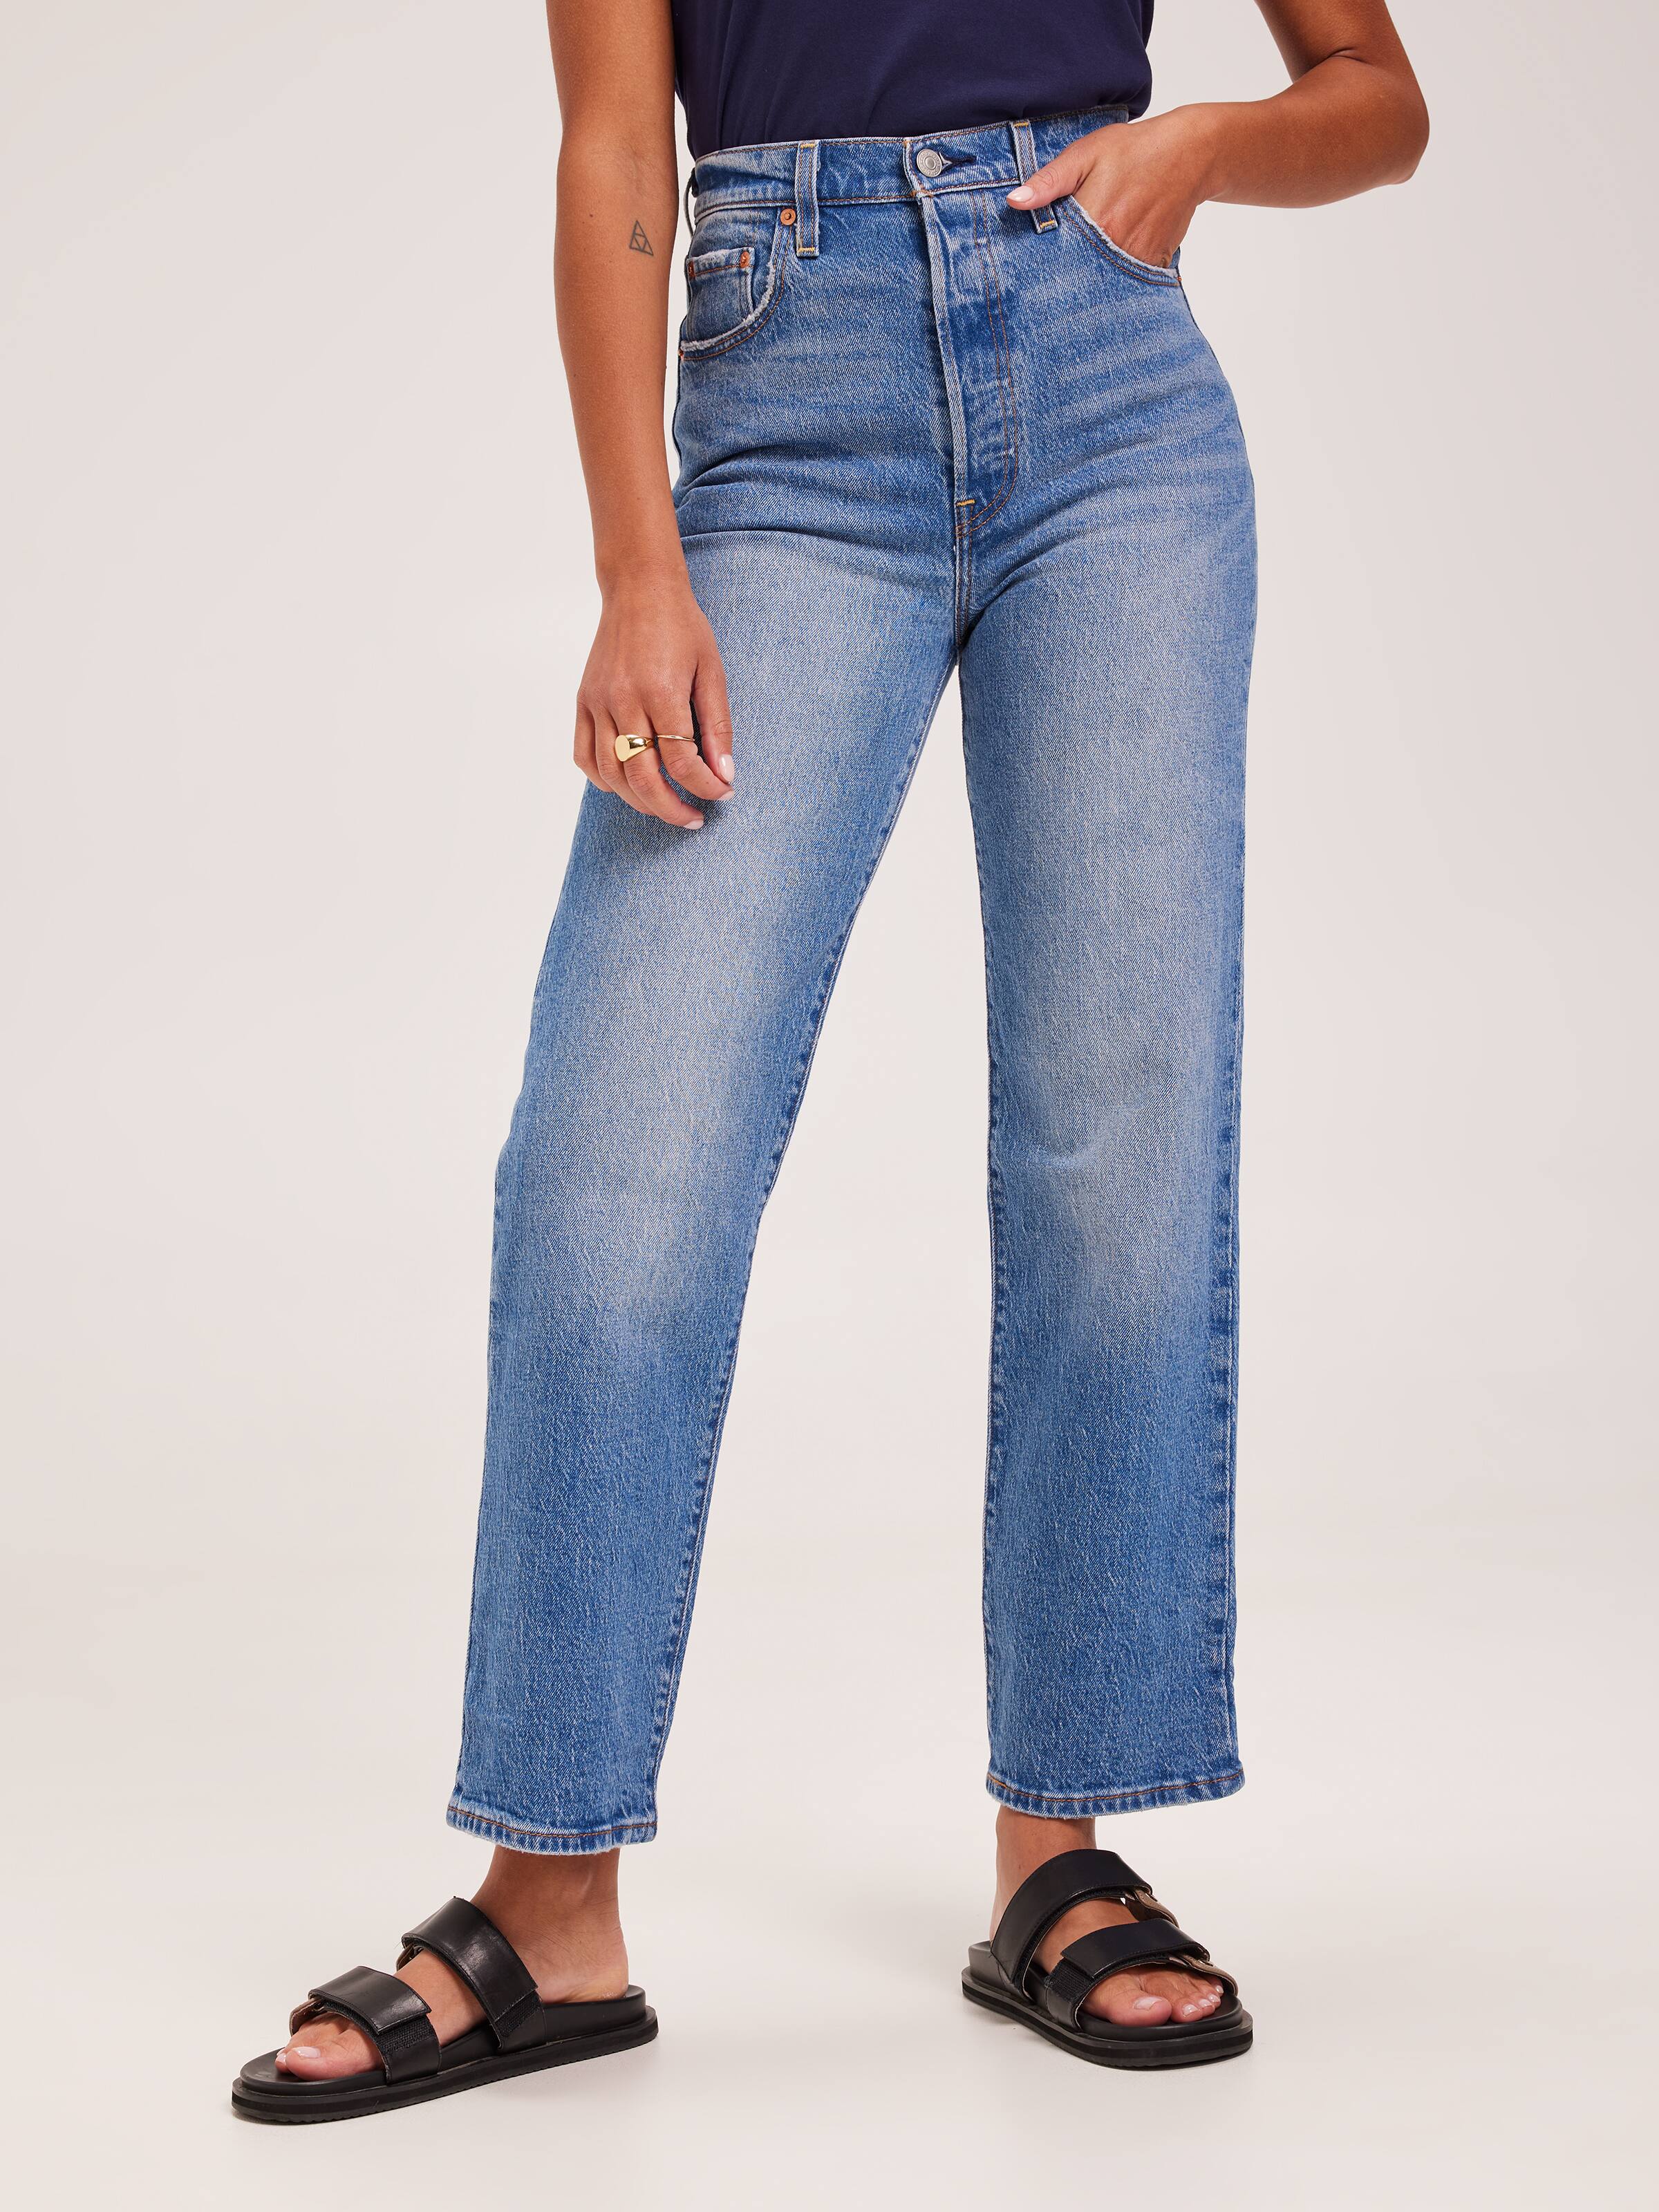 Women's Jeans By Levi's